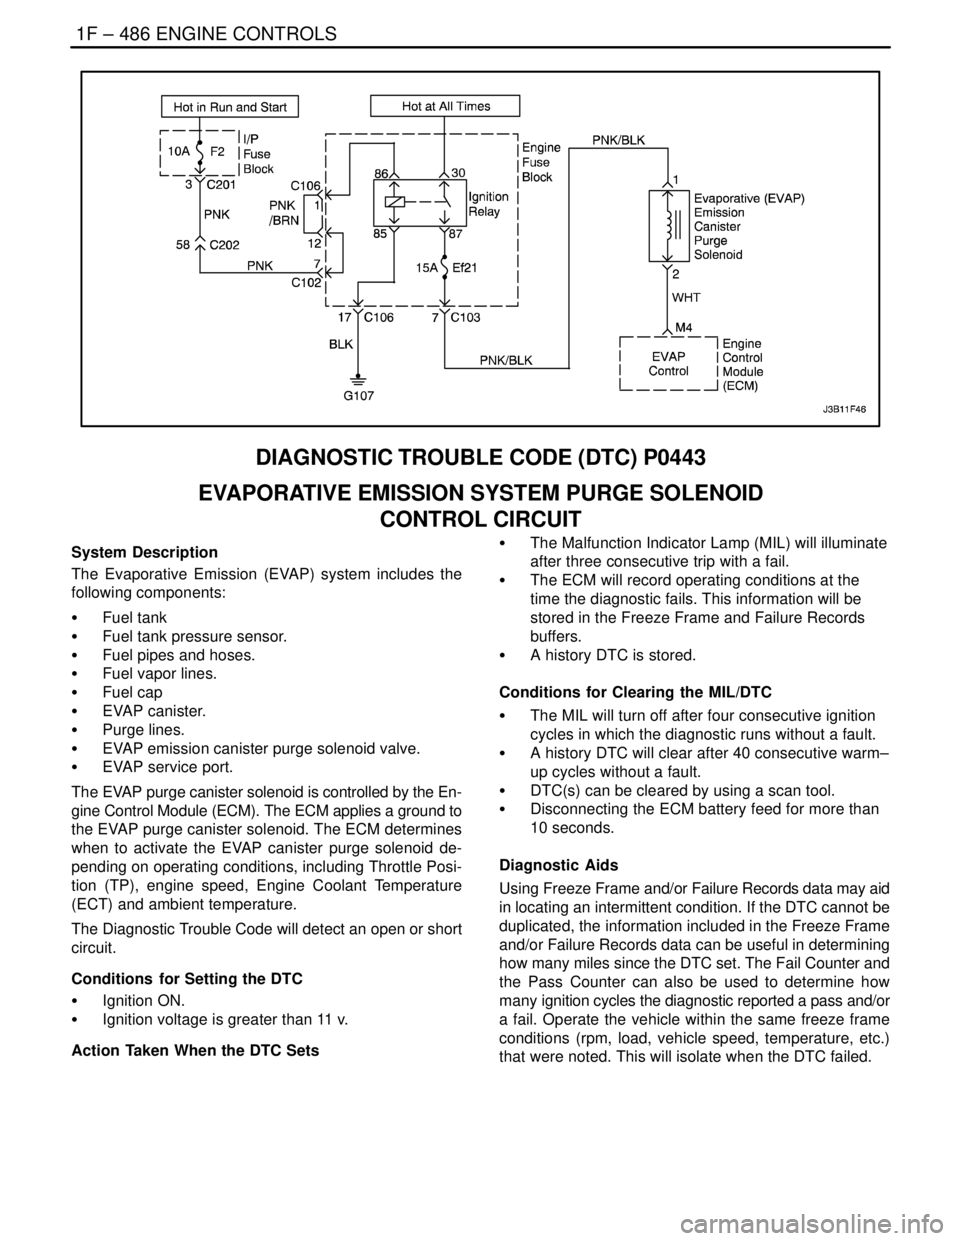 DAEWOO LACETTI 2004  Service Repair Manual 1F – 486IENGINE CONTROLS
DAEWOO V–121 BL4
DIAGNOSTIC TROUBLE CODE (DTC) P0443
EVAPORATIVE EMISSION SYSTEM PURGE SOLENOID
CONTROL CIRCUIT
System Description
The Evaporative Emission (EVAP) system i